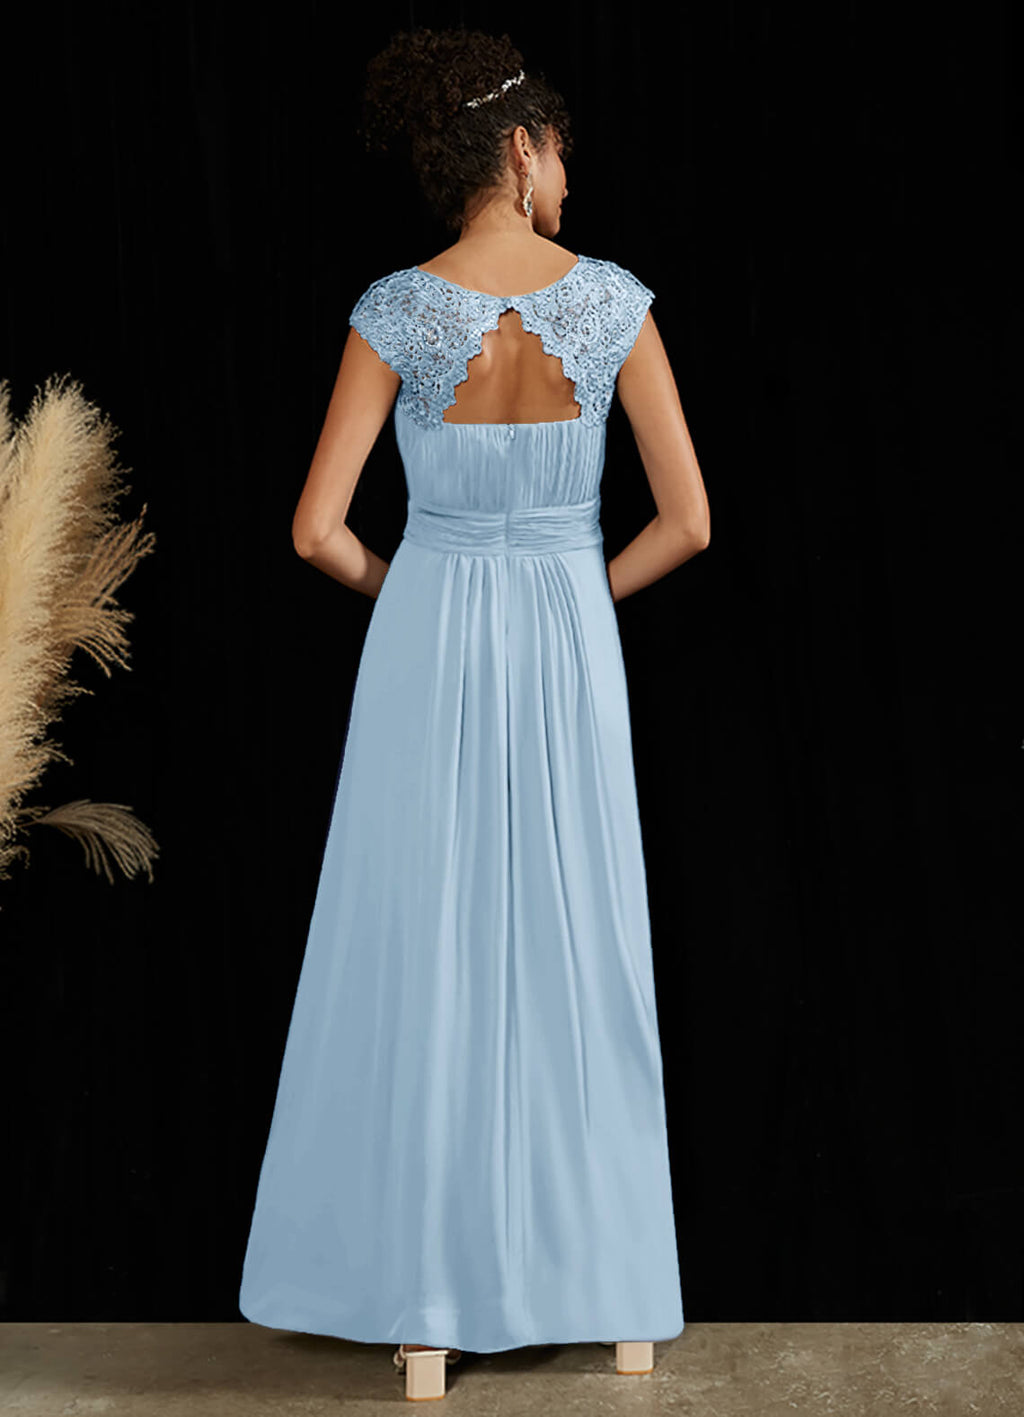 NZ Bridal Cornflower Blue Lace Empire Chiffon Maxi bridesmaid dresses 09996ep Ryan a